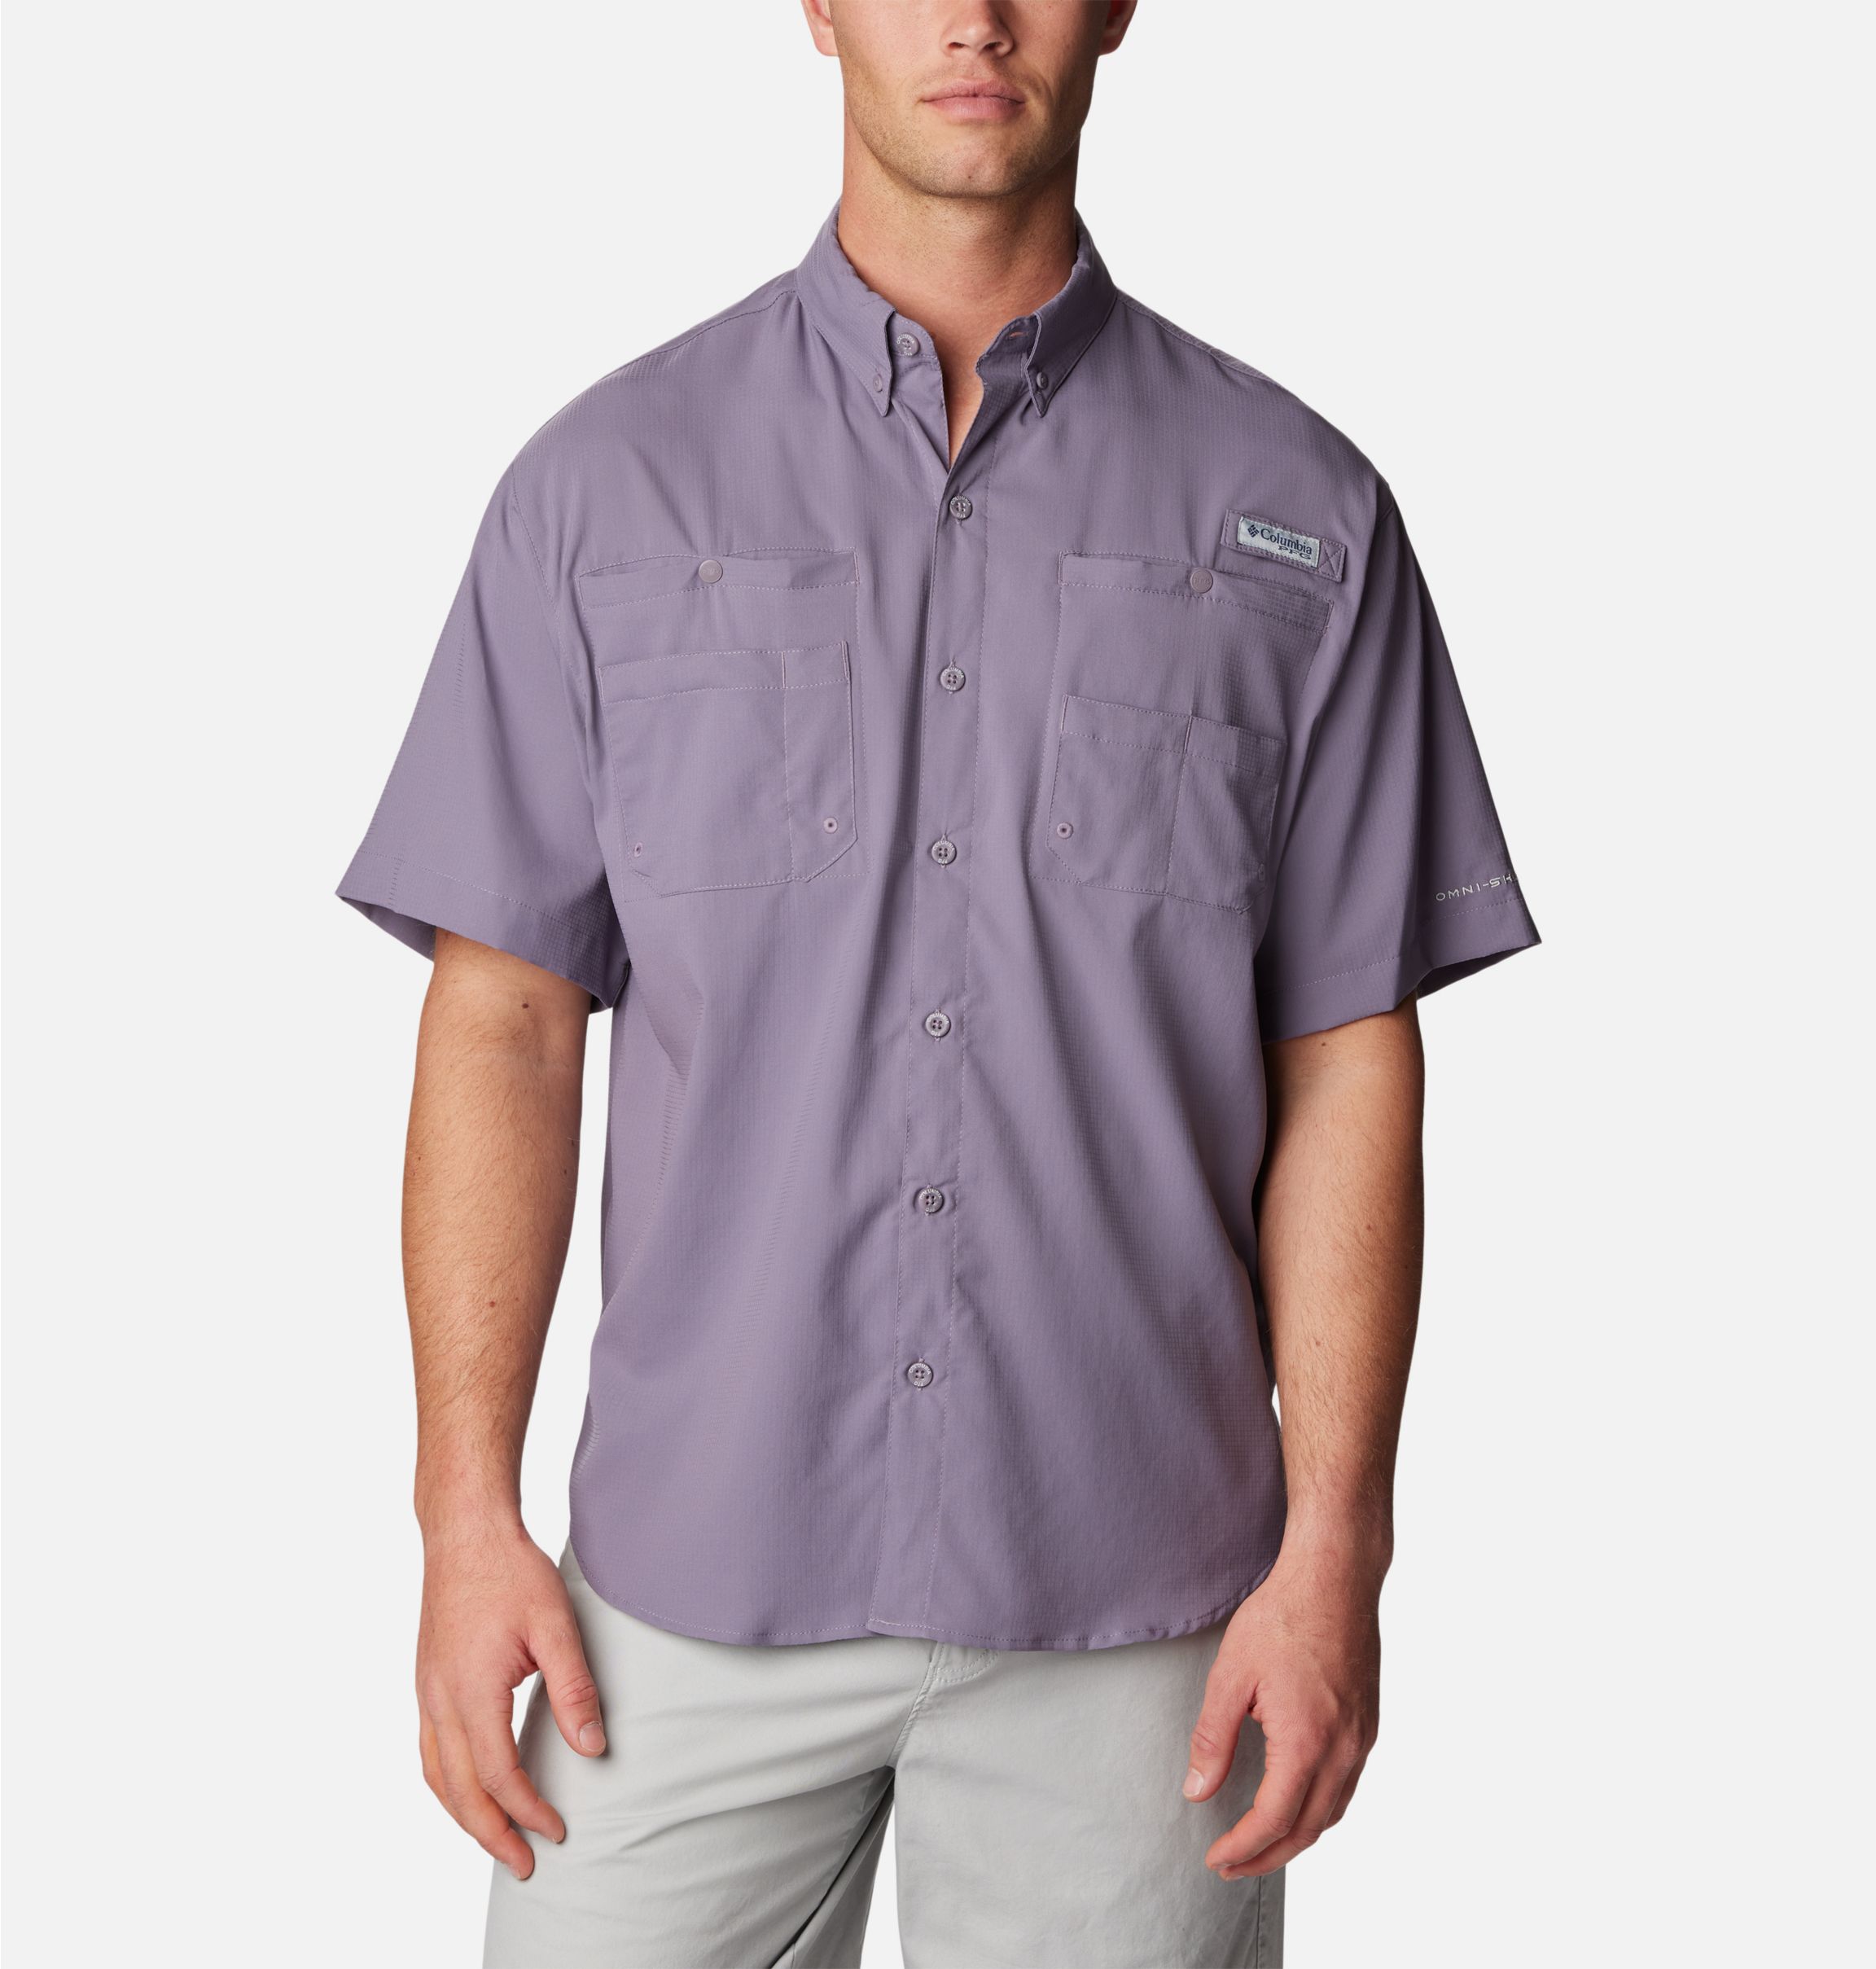 Columbia Sportswear - Fishing Shirt - Tamiami- Road Logo - Grey Small